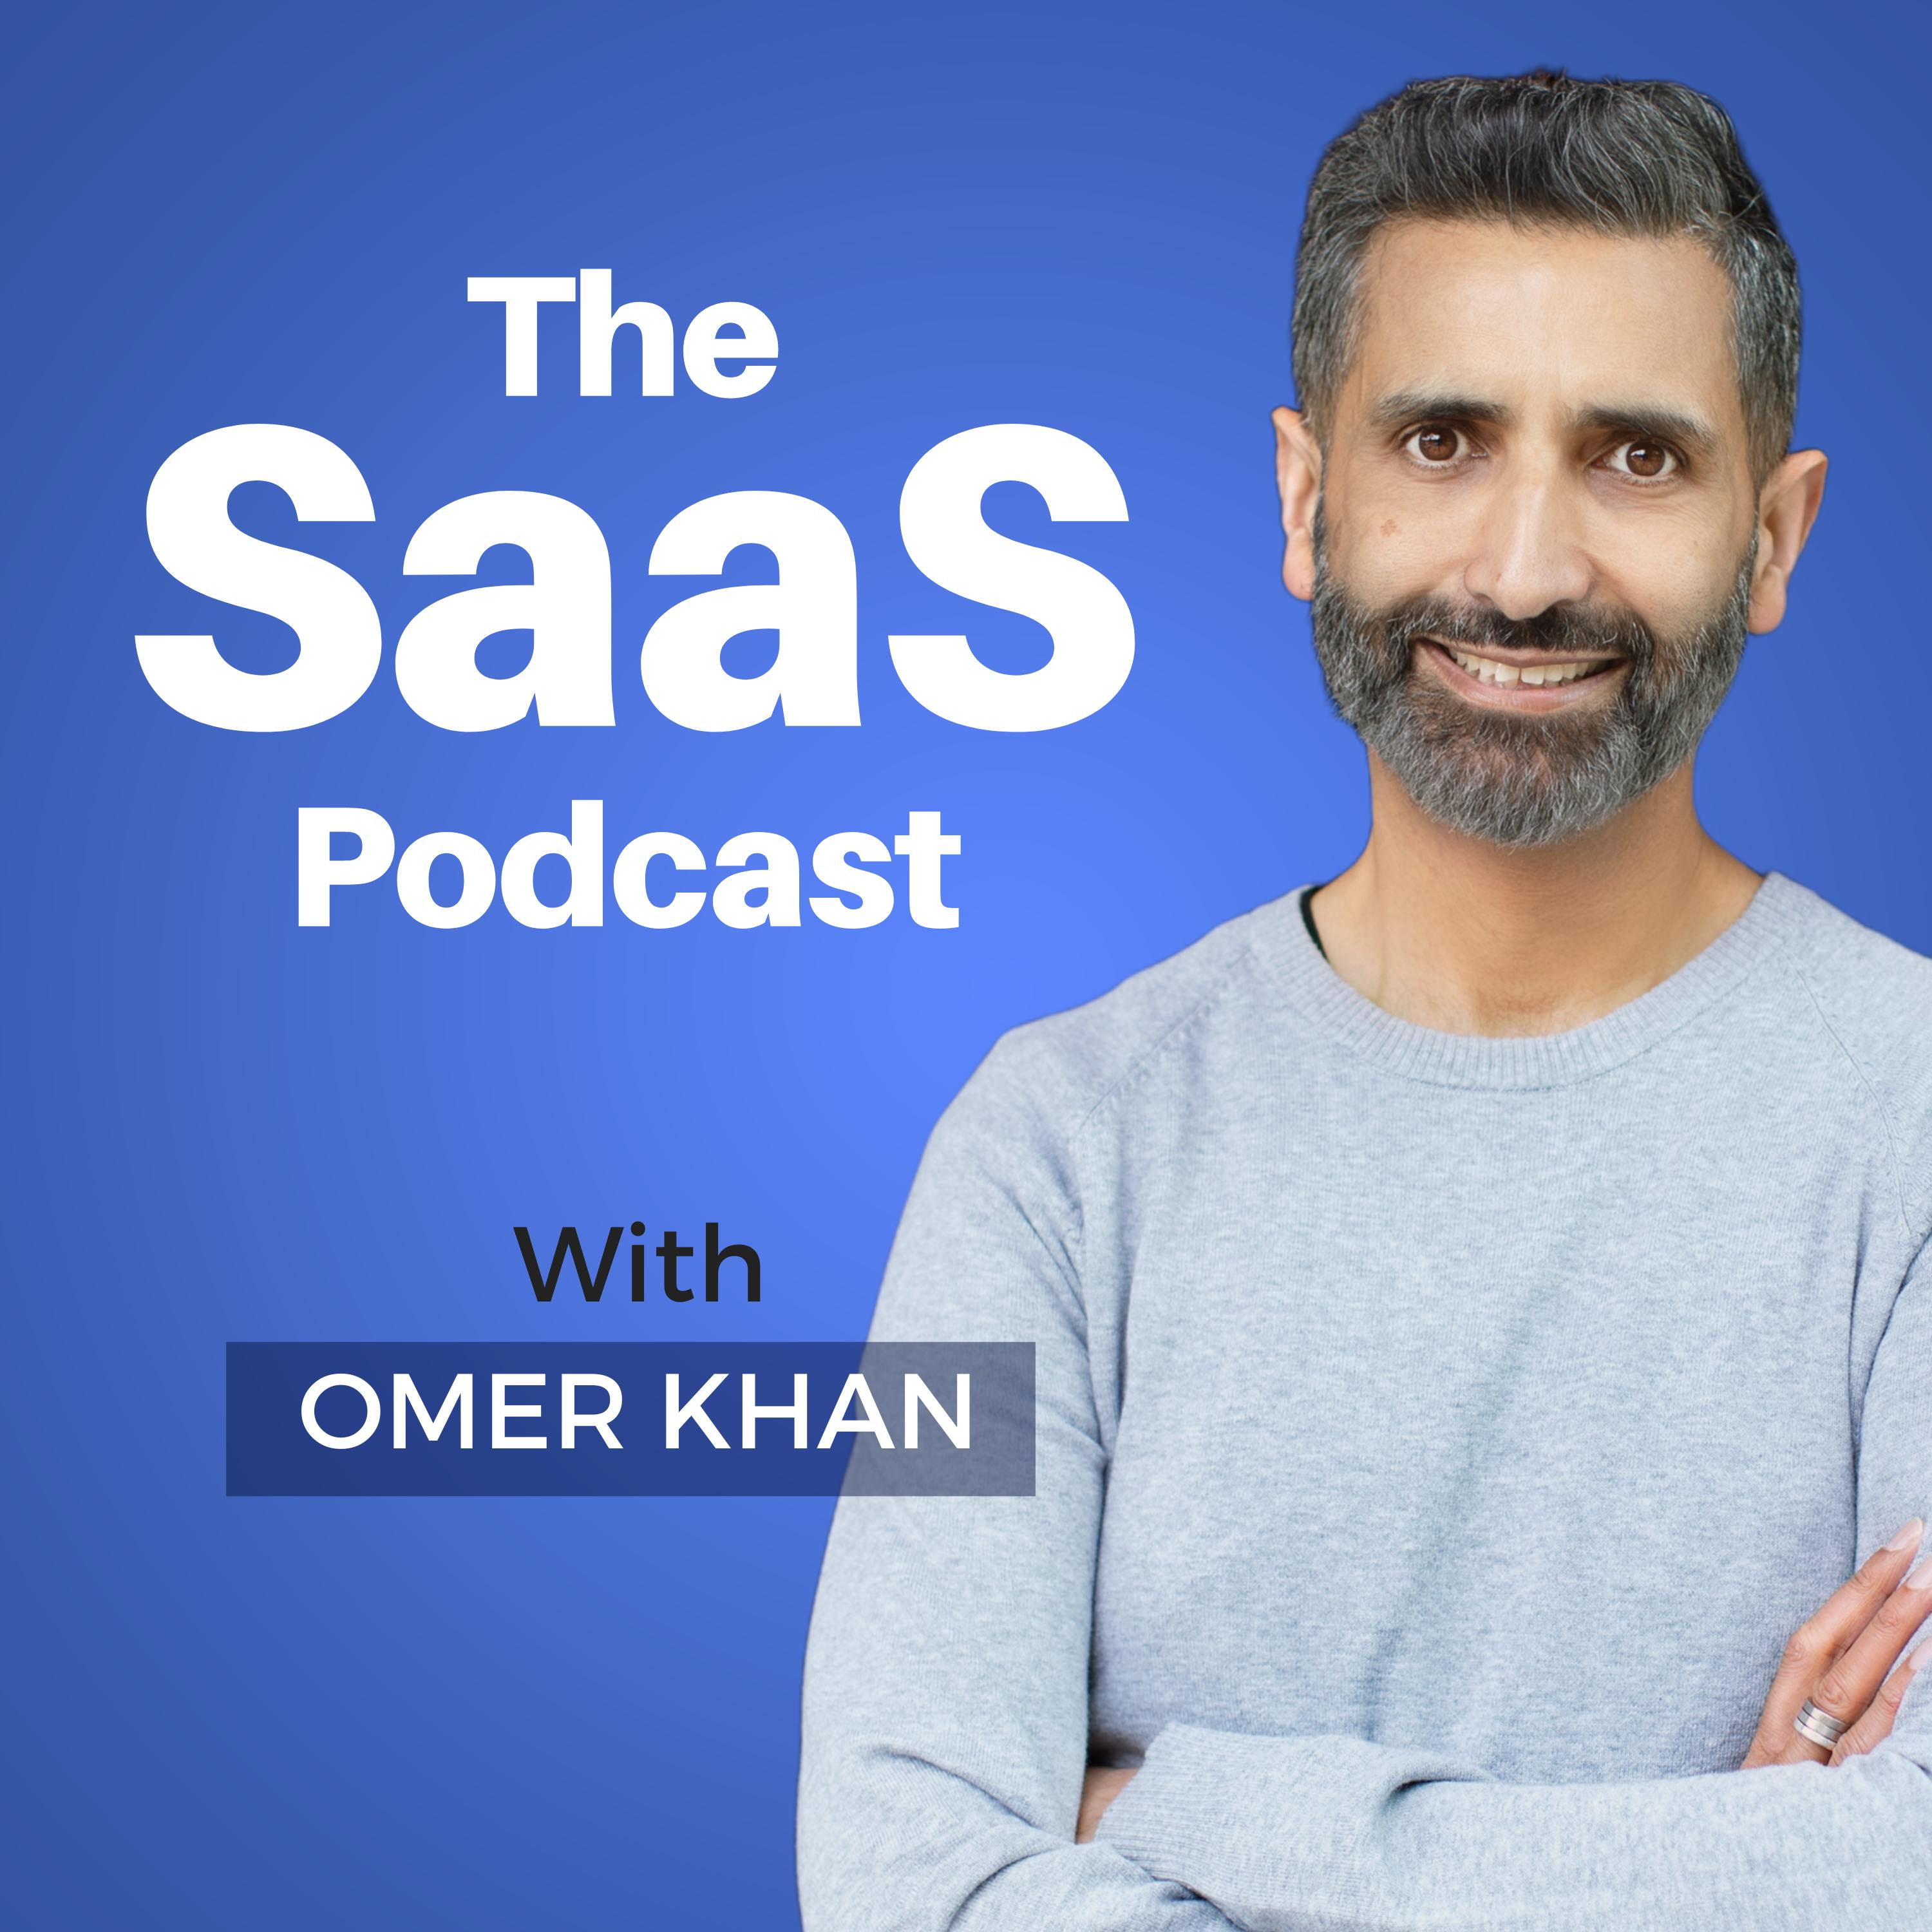 The SaaS Podcast - SaaS, Startups, Growth Hacking & Entrepreneurship